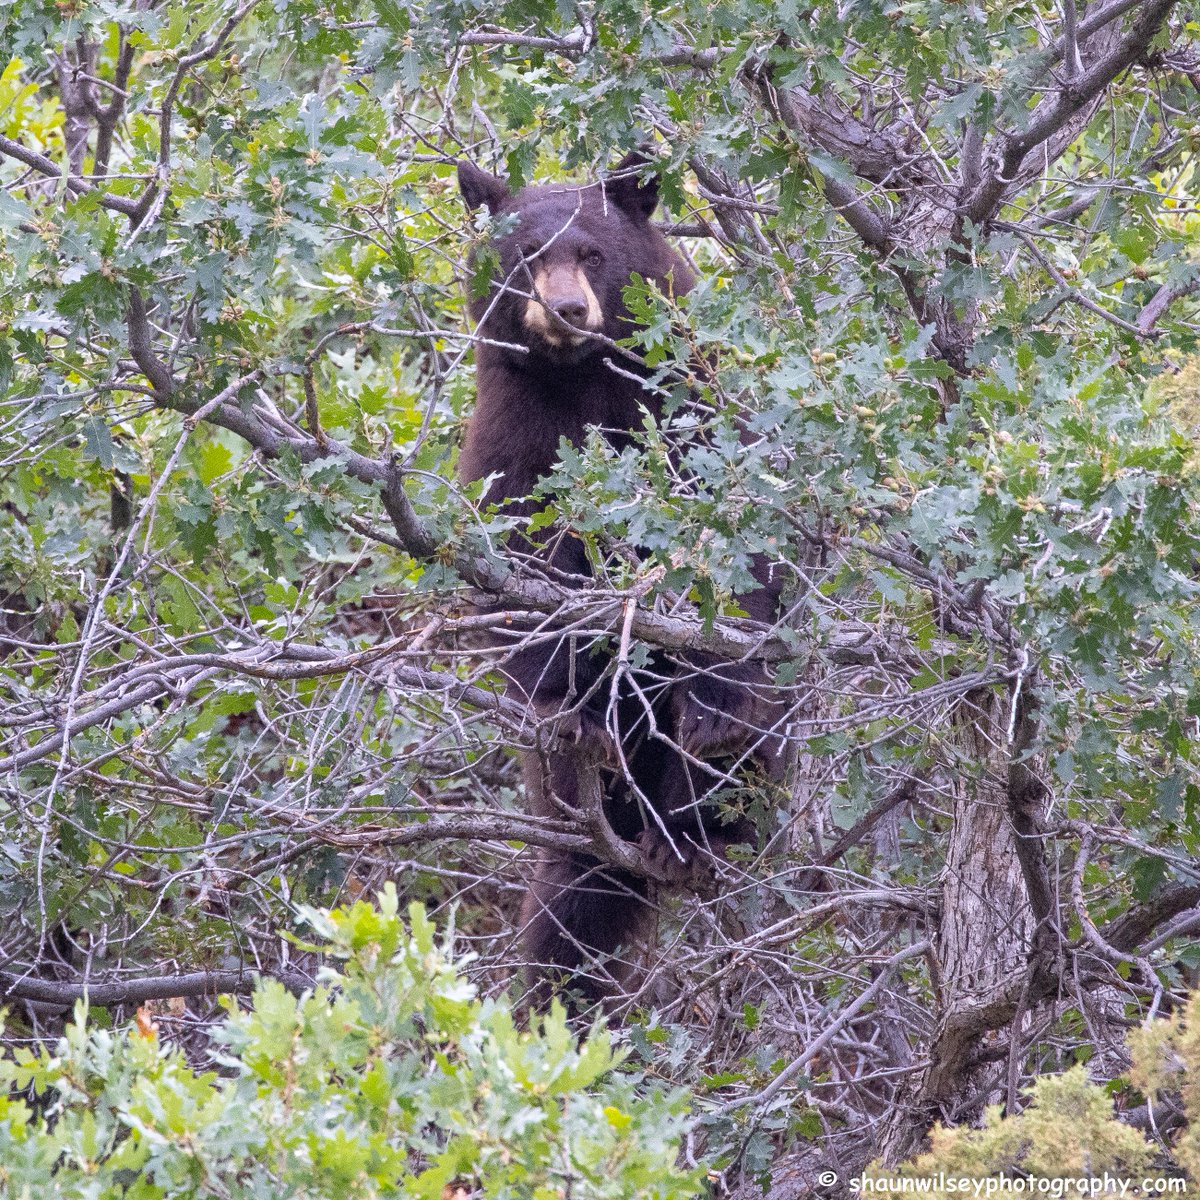 Black Bear watching the photographer while it eats some acorns. Colorado 8/21/2022. #colorado #coloradophotography #photography #wildlife #wildlifephotography #bear #bears #bearlovers #blackbear #blackbears #curious